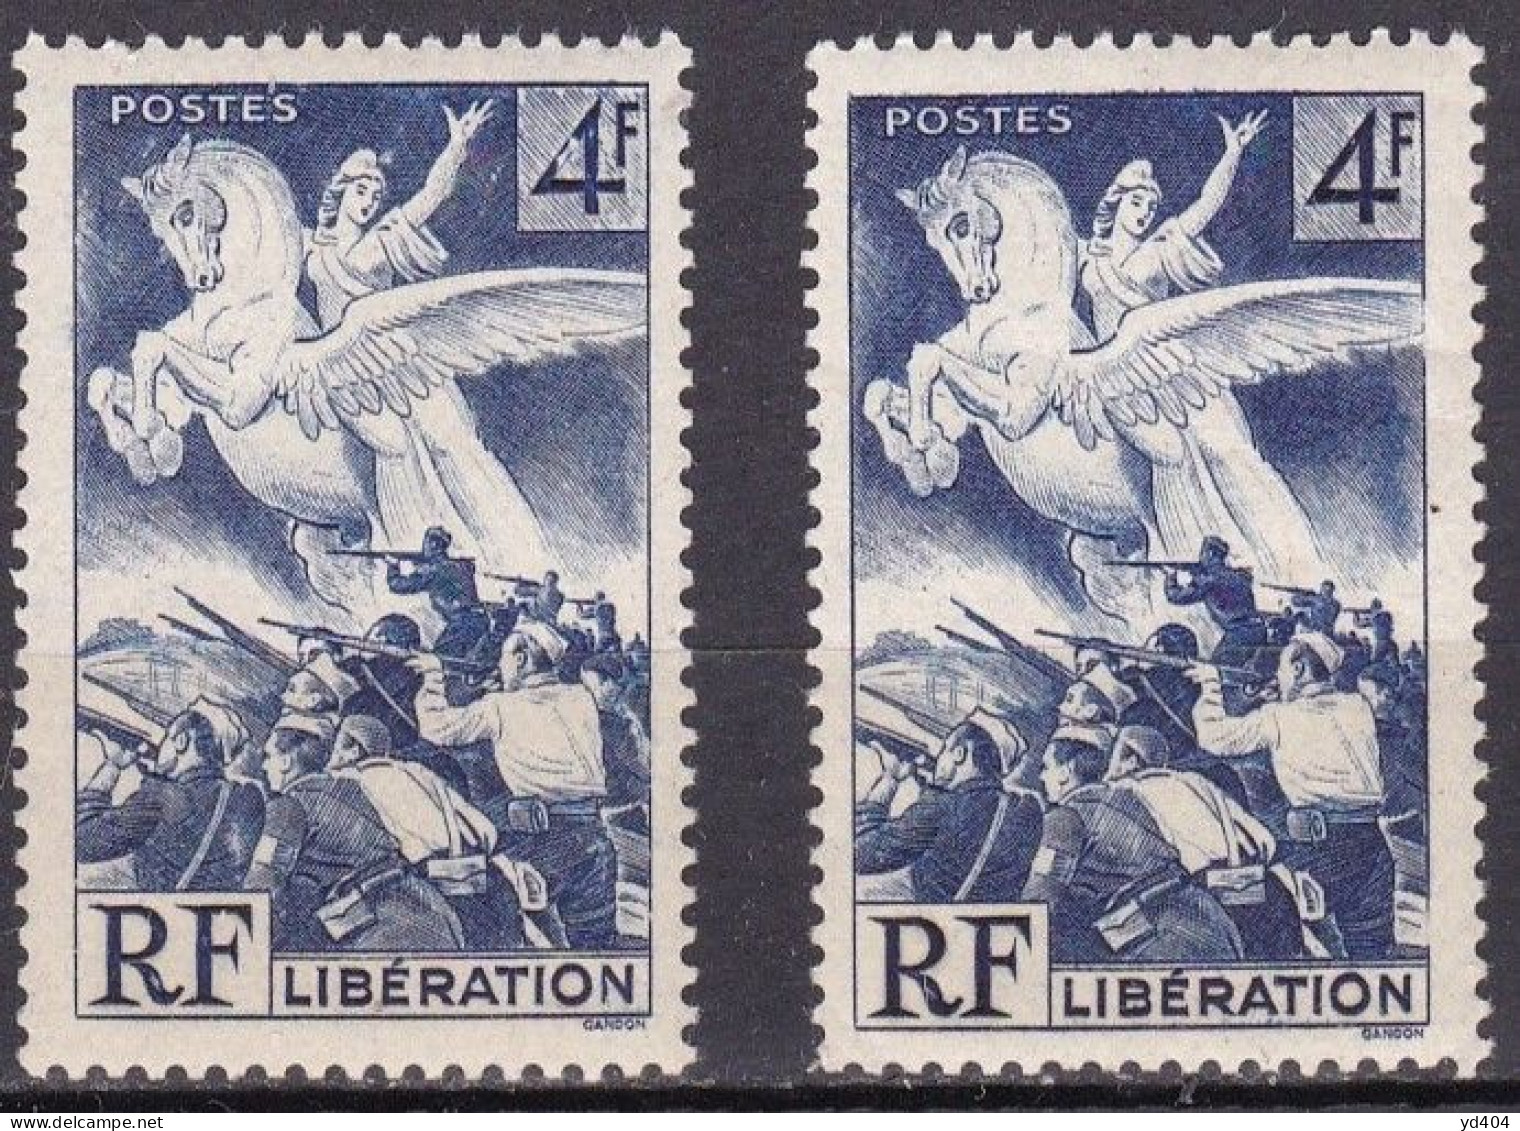 FR7112 - FRANCE – 1945 – LIBERATION - Y&T # 669a MNH - Neufs